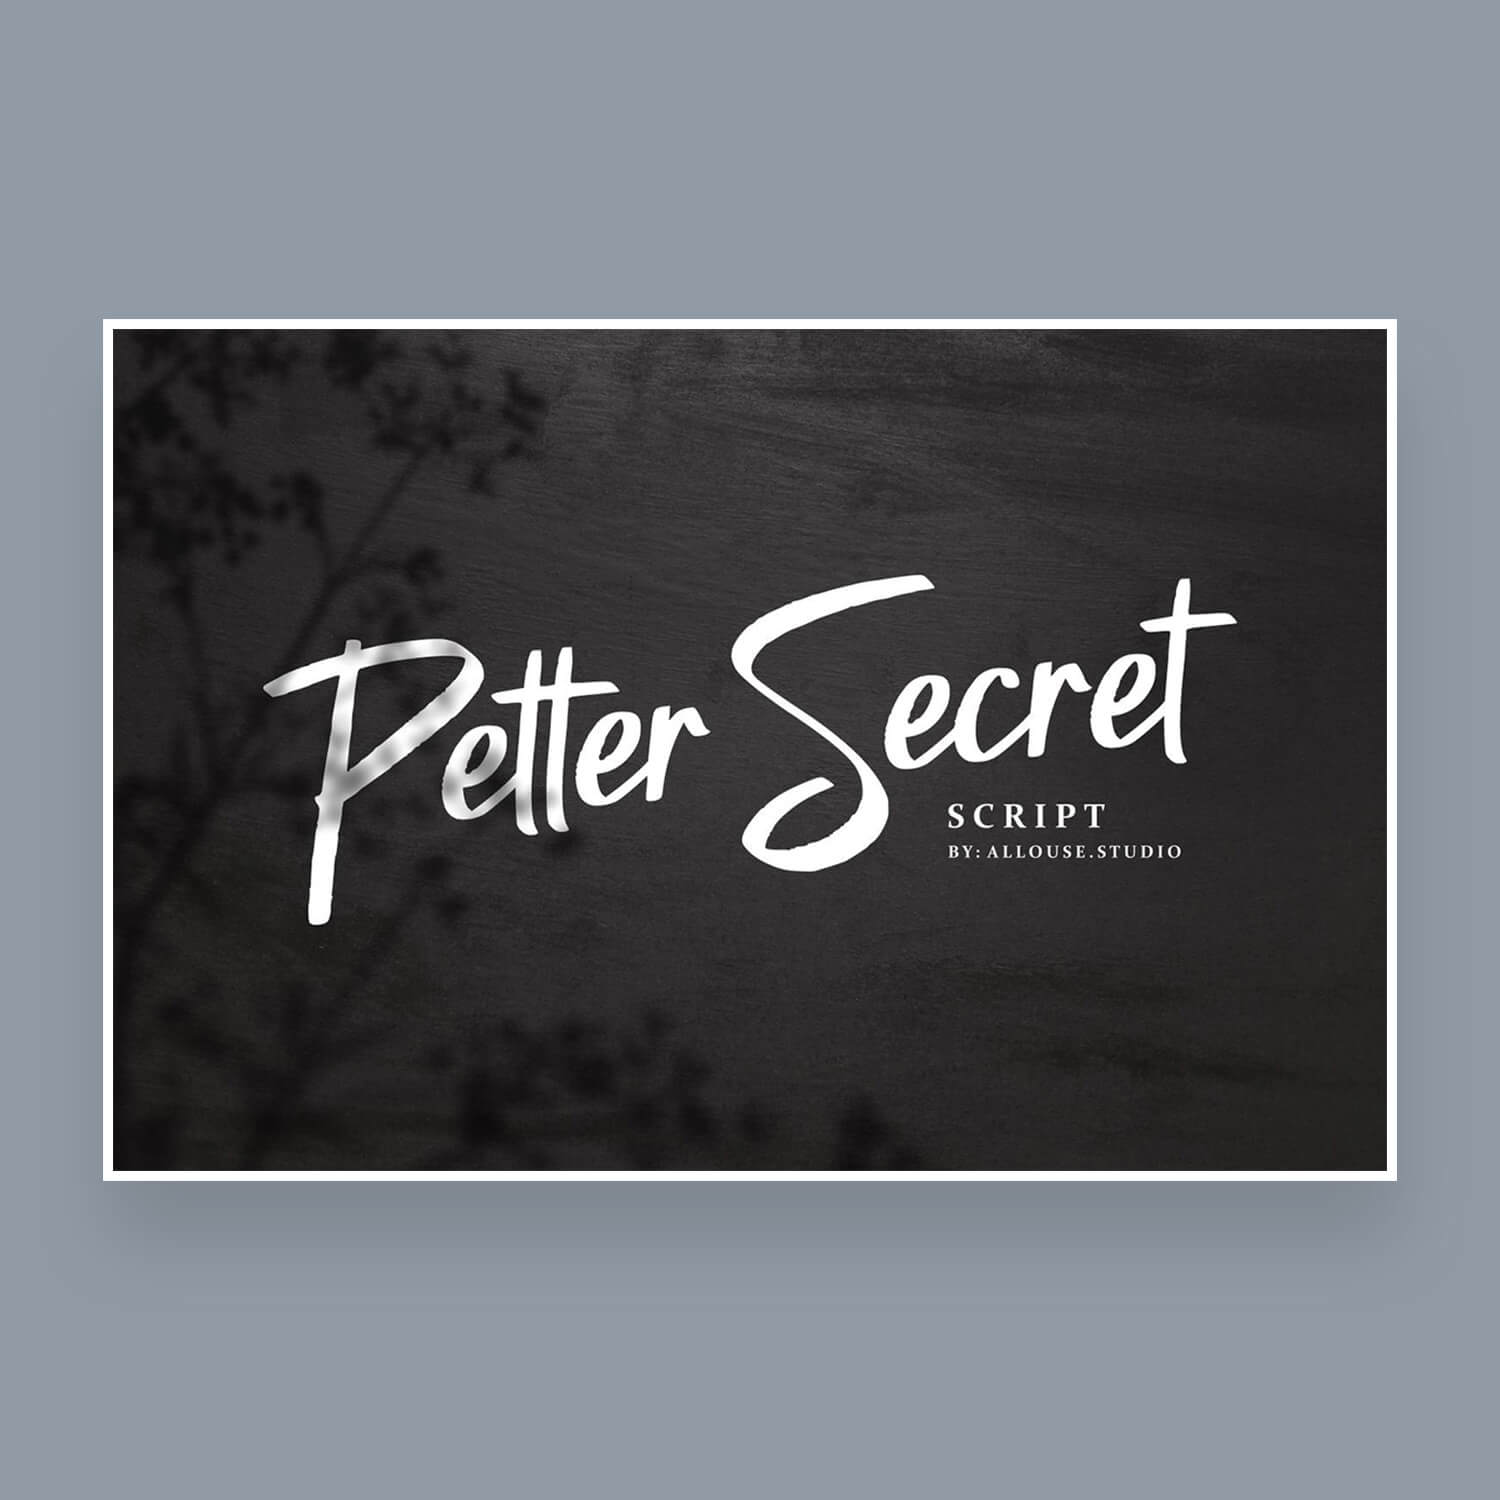 petter secret beautiful handwritten font cover image.